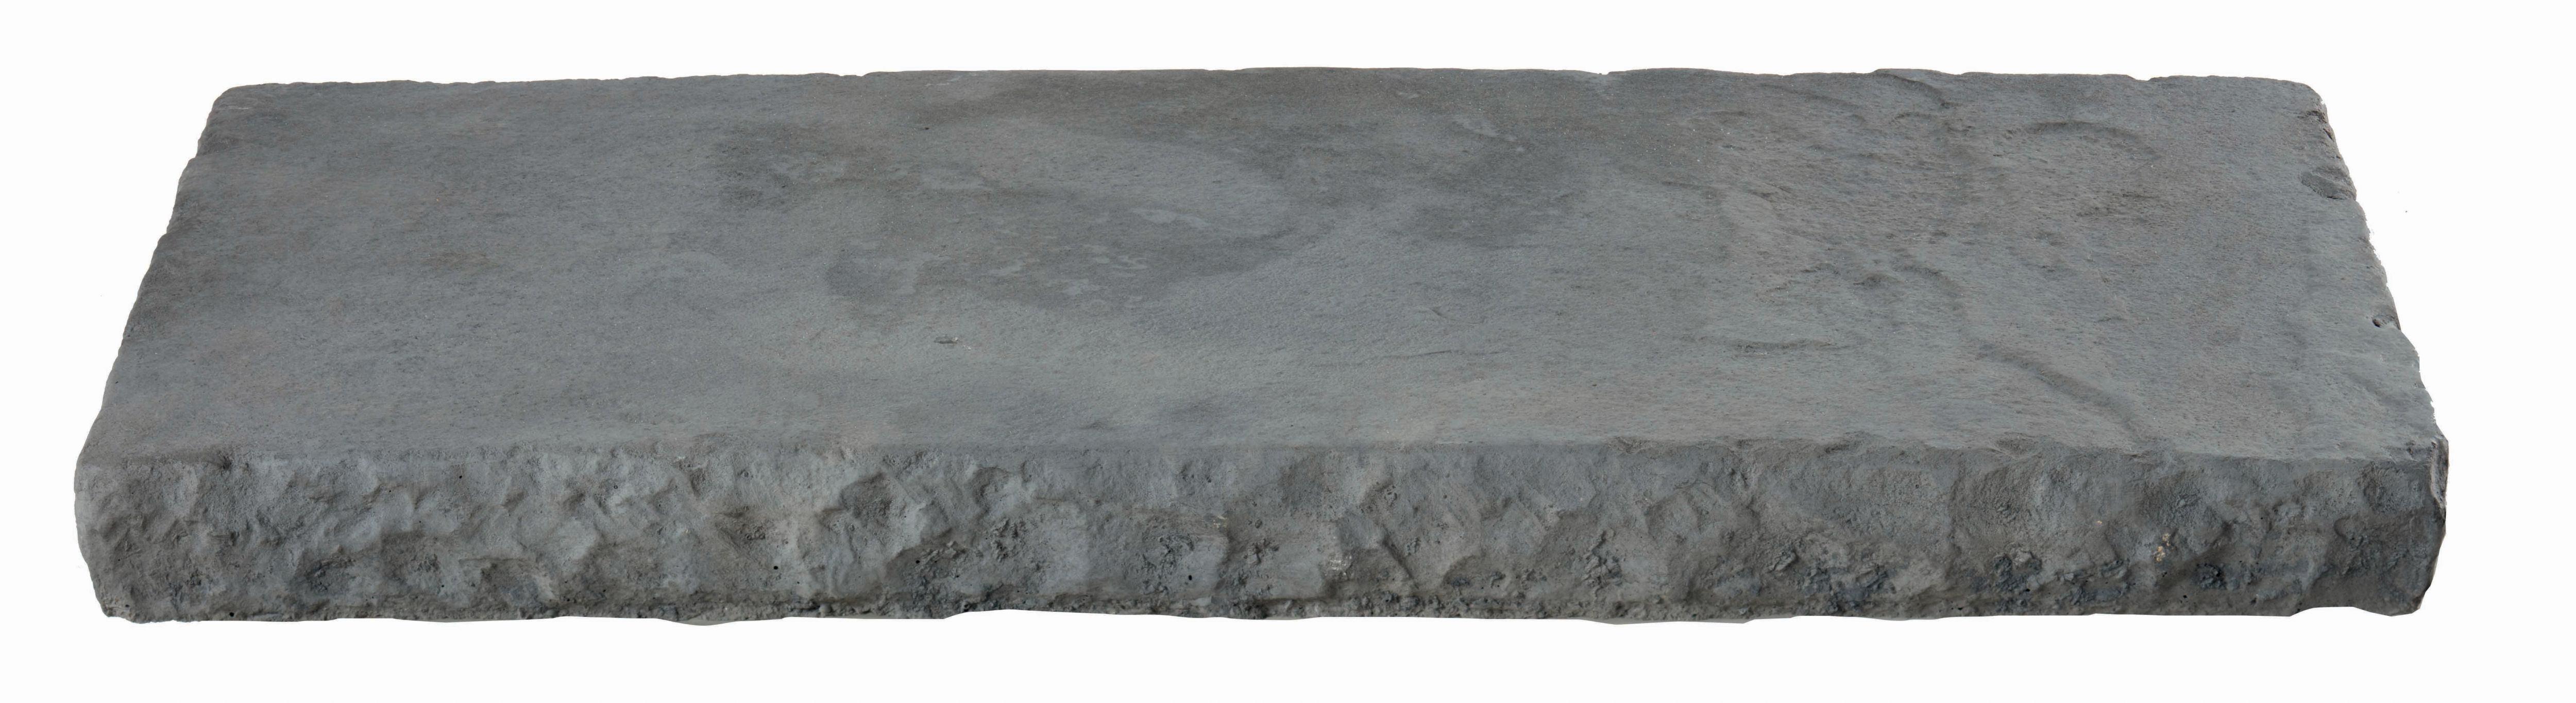 Marshalls Drivesett Tegula Traditional Textured Coping Stone - 600 x 300 x 45mm - Pack of 20